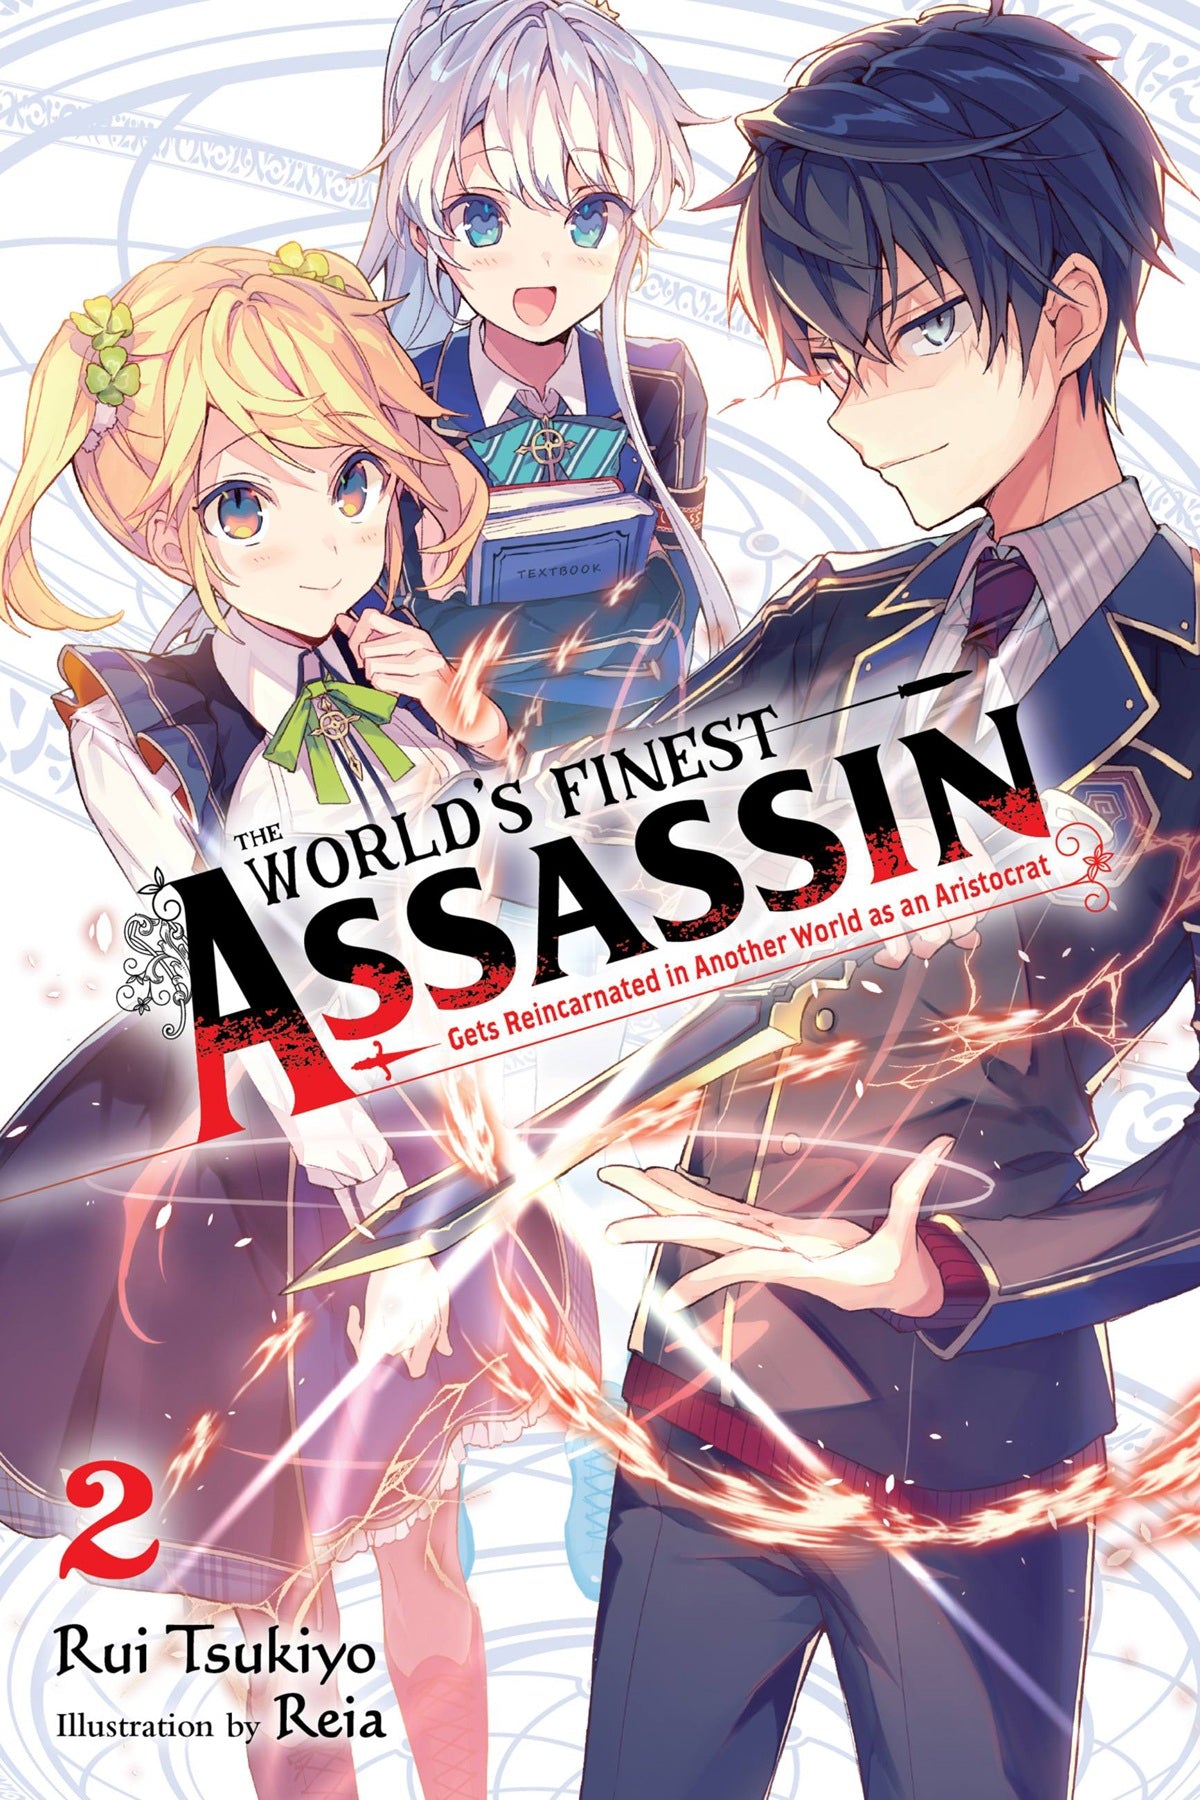 The World's Finest Assassin Gets Reincarnated in Another World as an Aristocrat Vol. 02 (Light Novel)